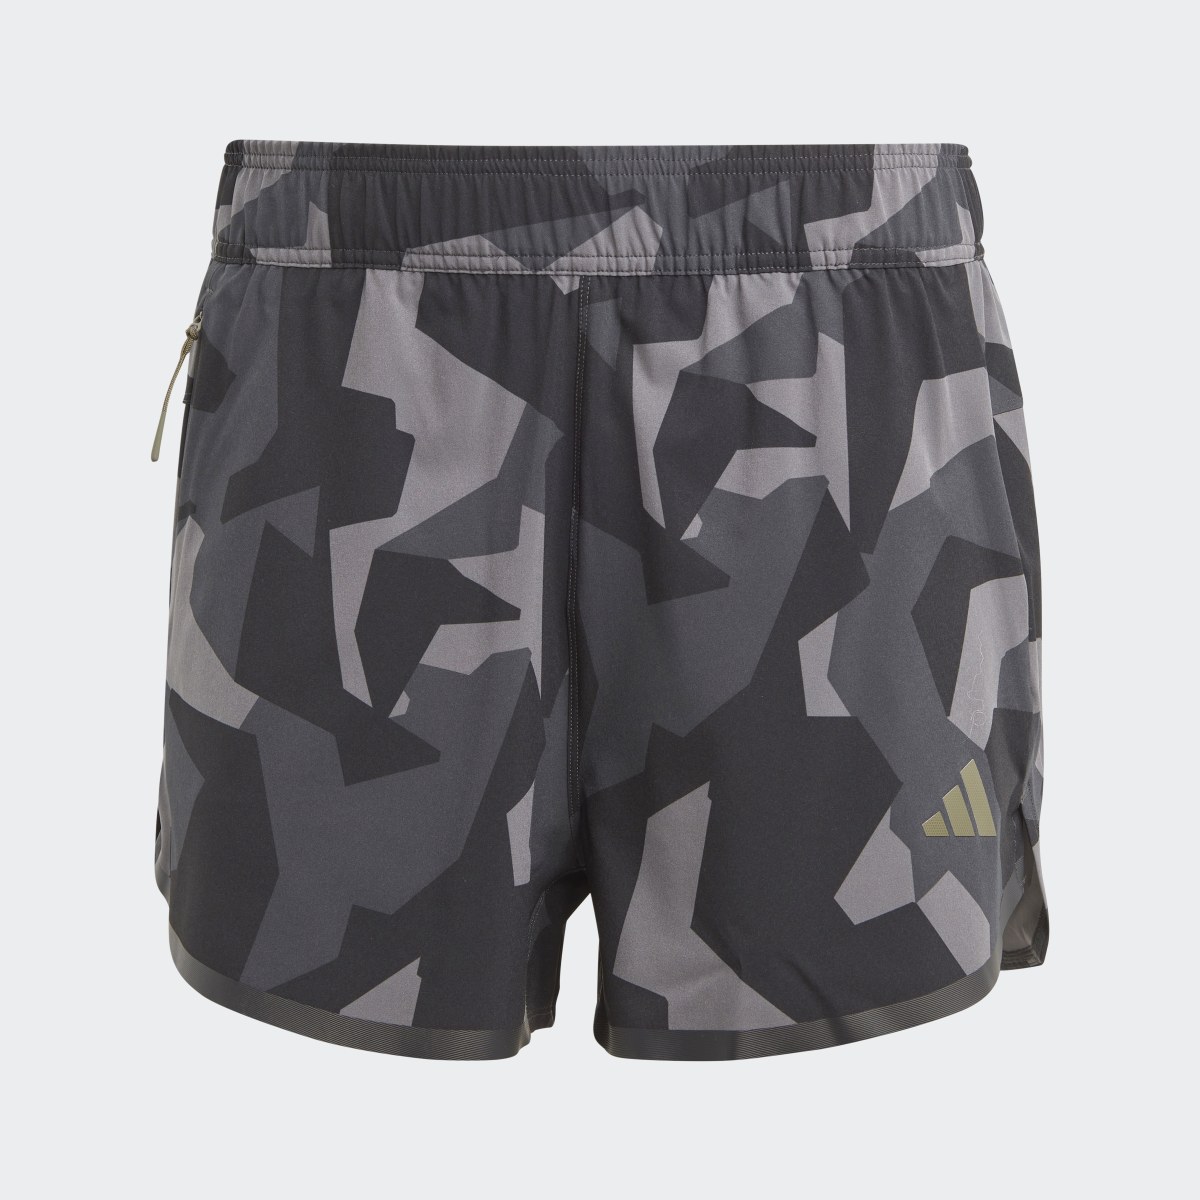 Adidas Shorts Designed for Training Pro Series Strength. 5